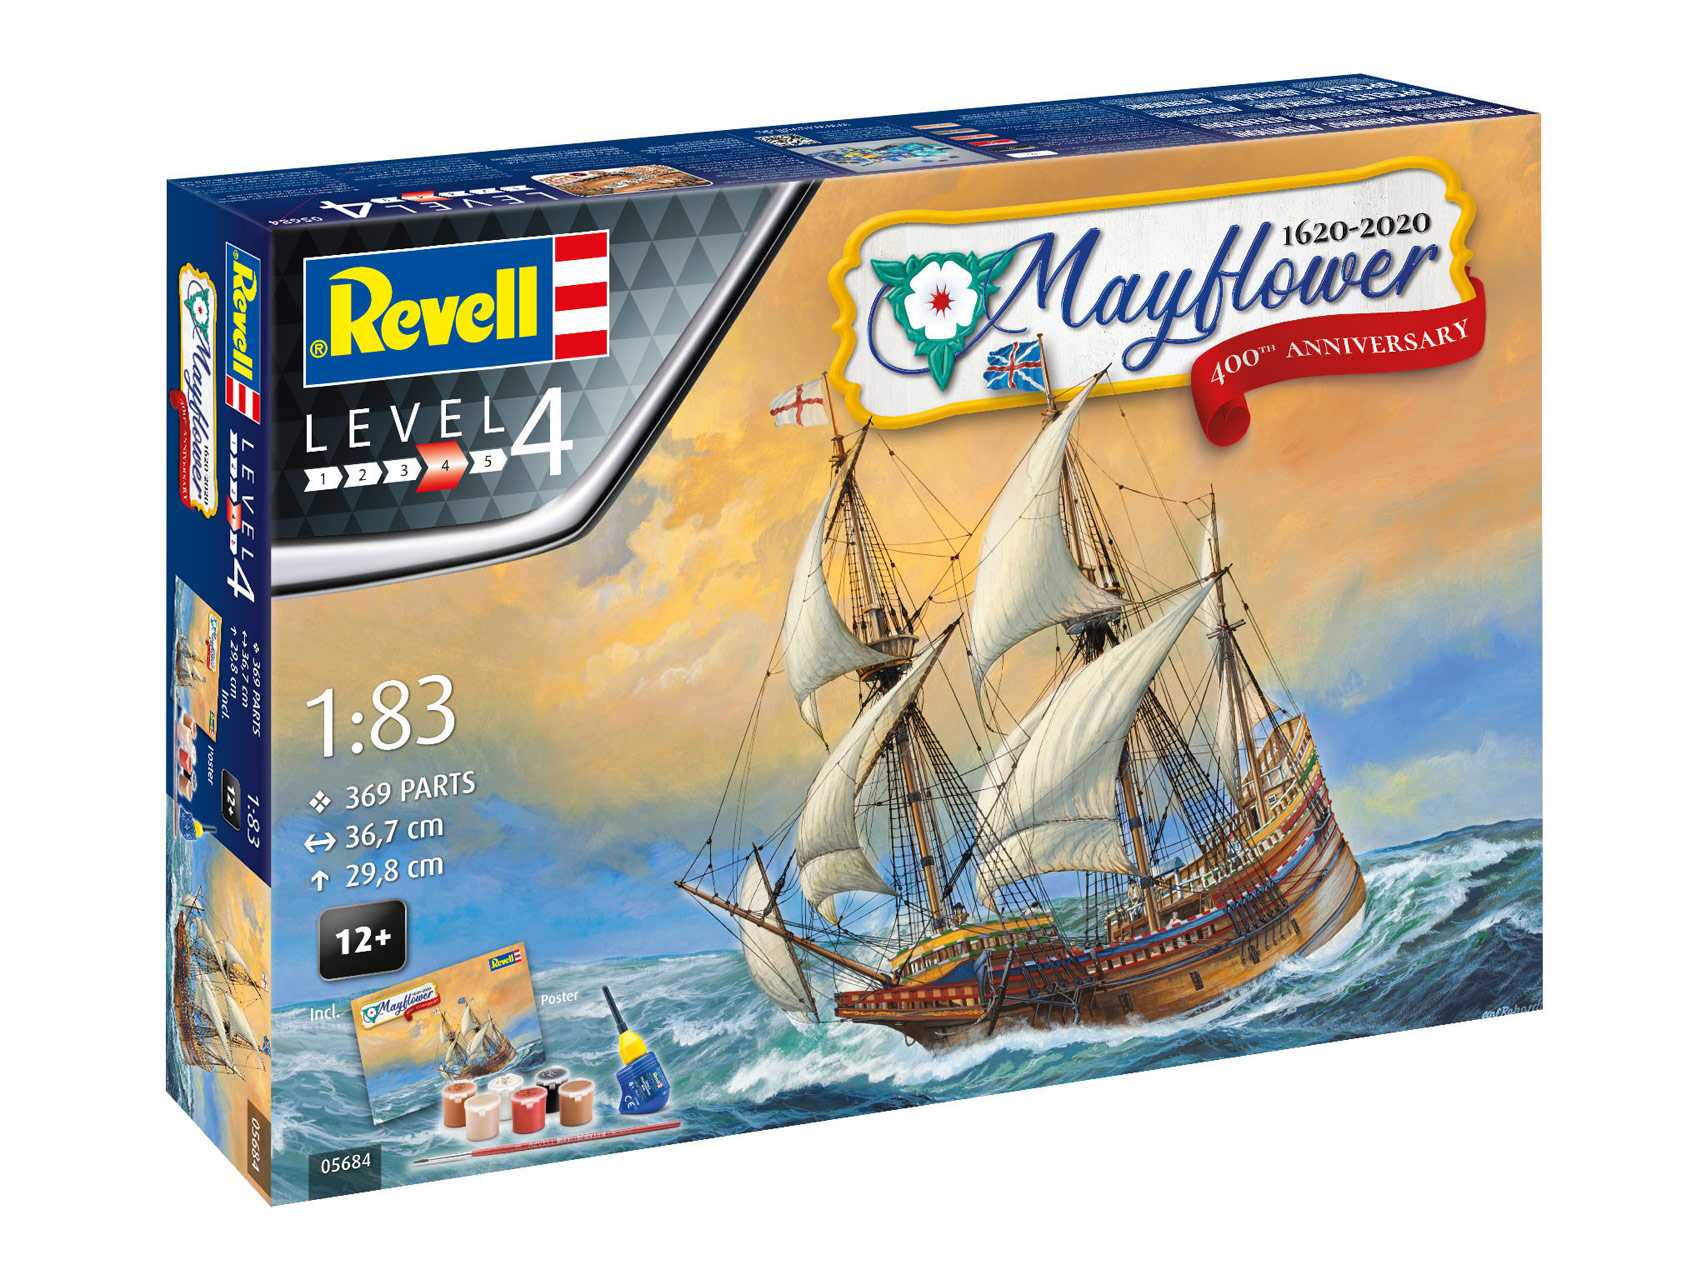 Revell Gift-Set loď 05684 - Mayflower 400th Anniversary (1:83)